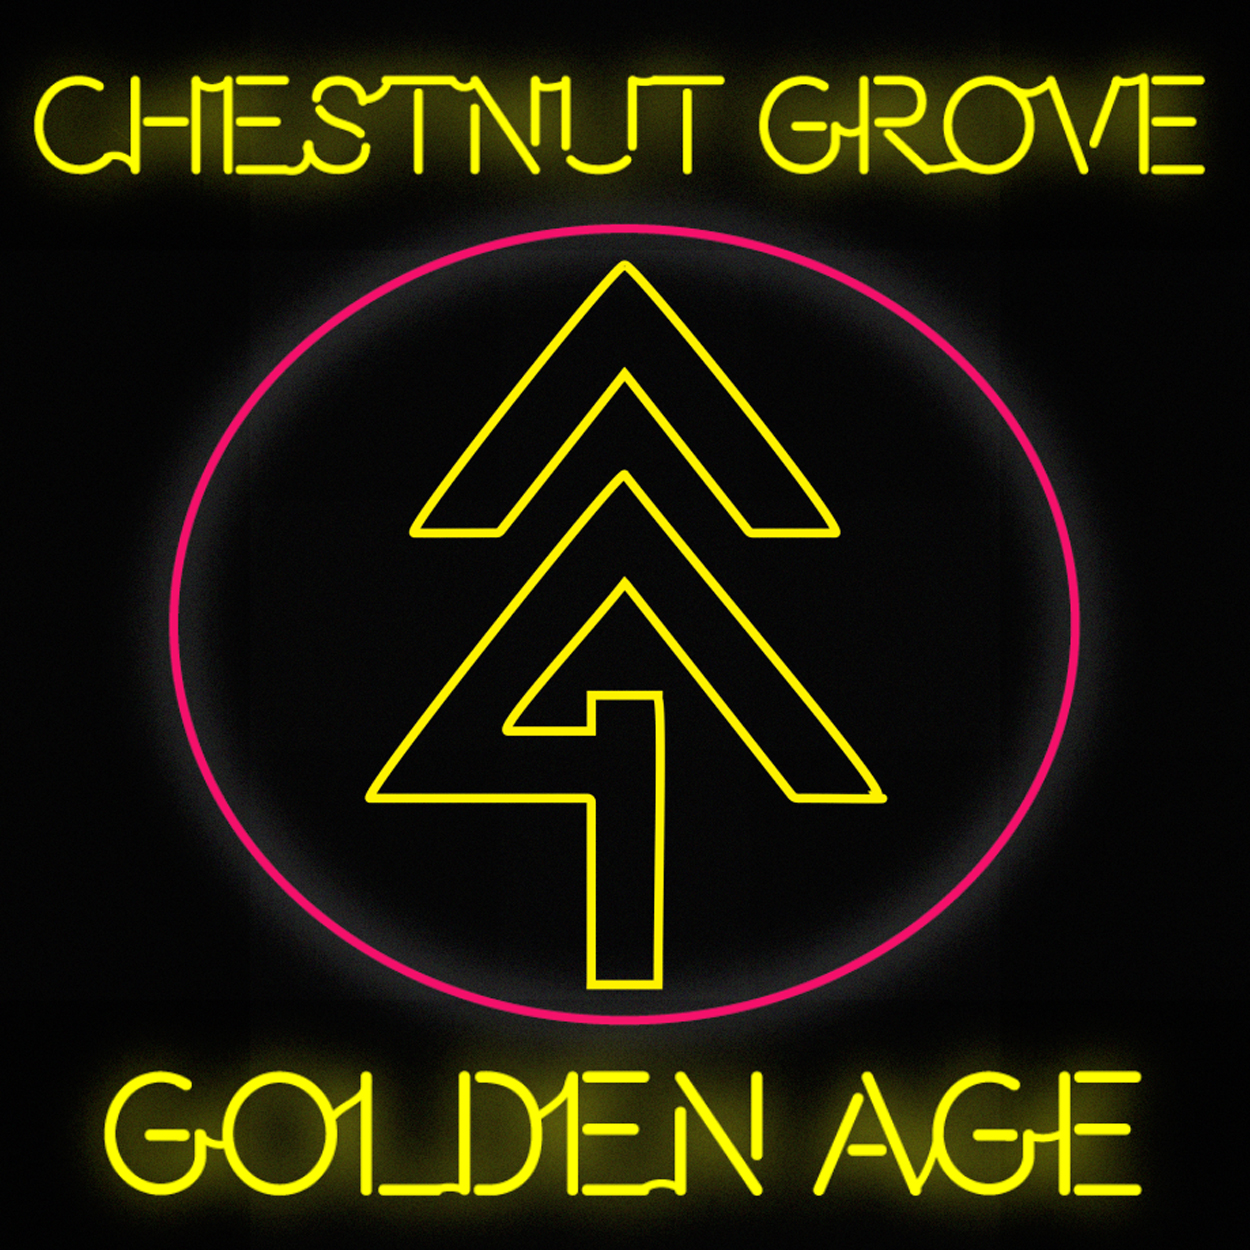 Chestnut Grove